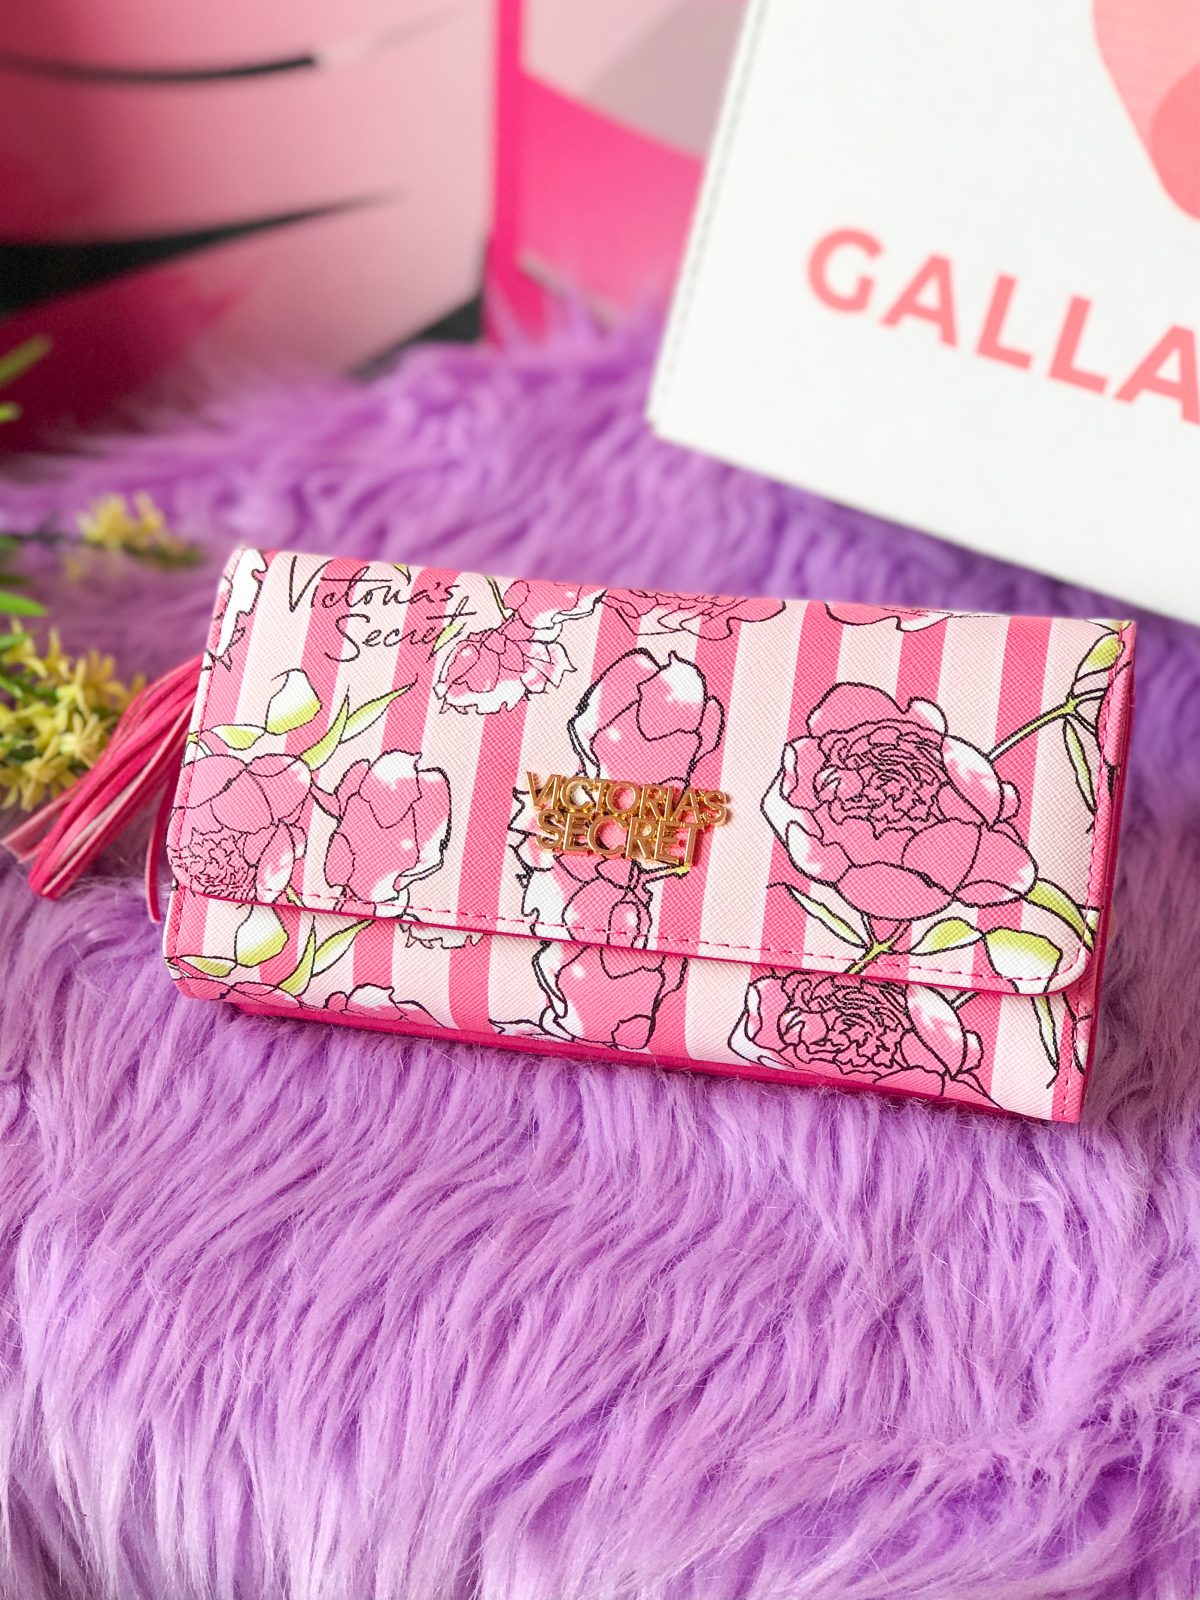 billetera rosada victoria's secret - ecuador - ropa gallardo